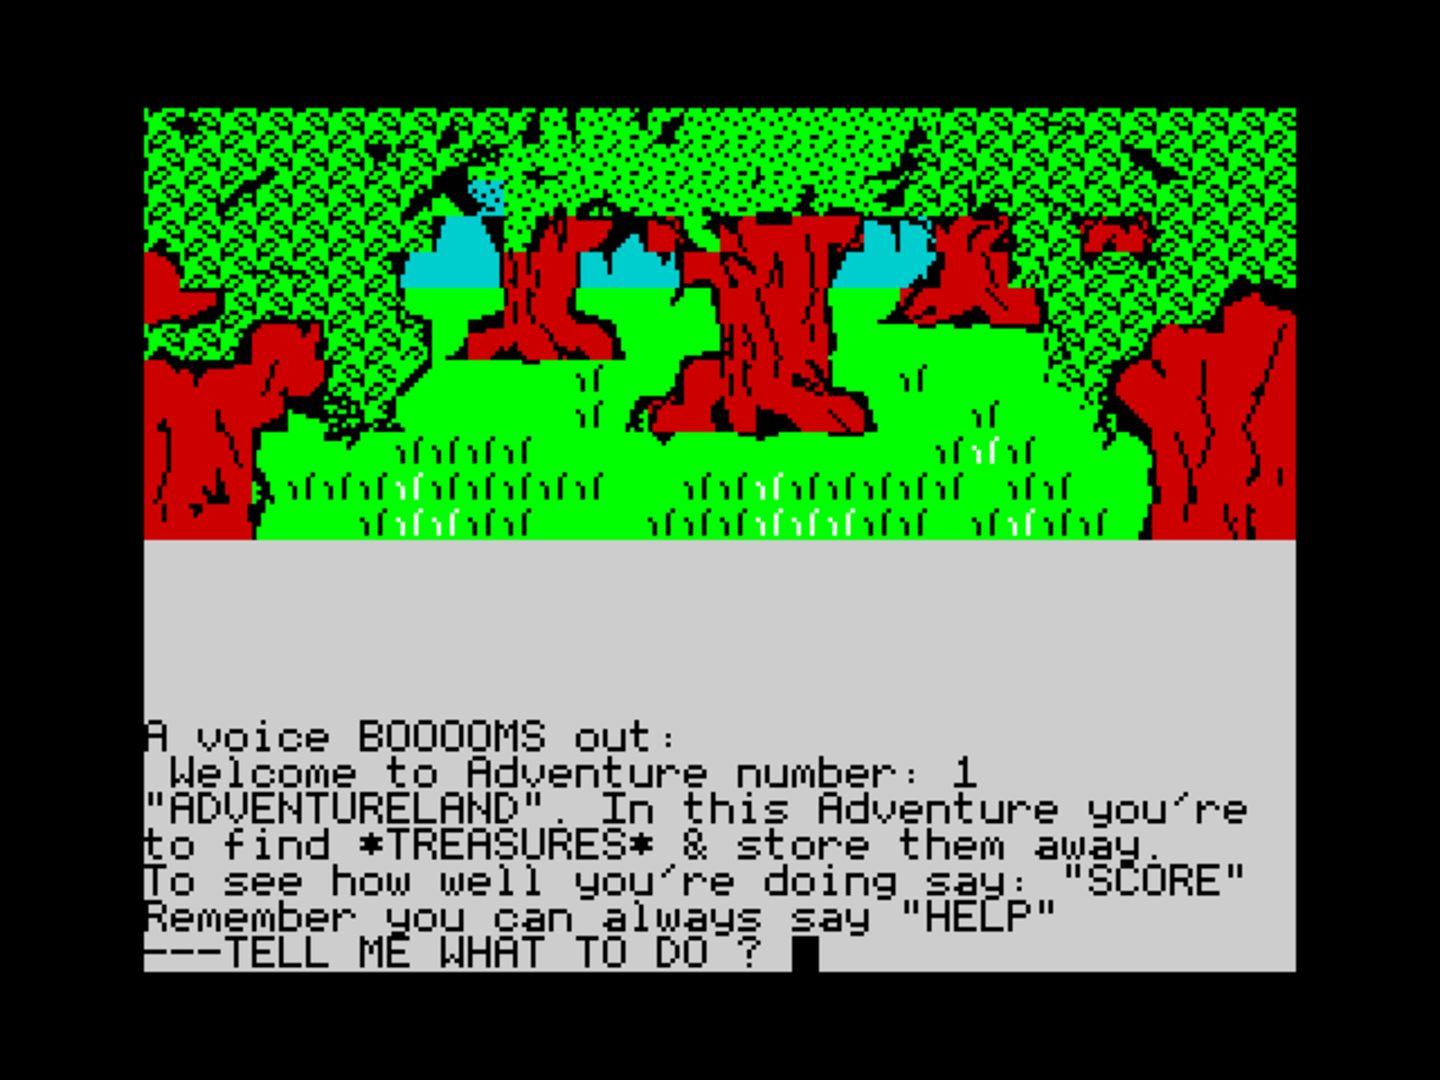 Adventureland screenshot